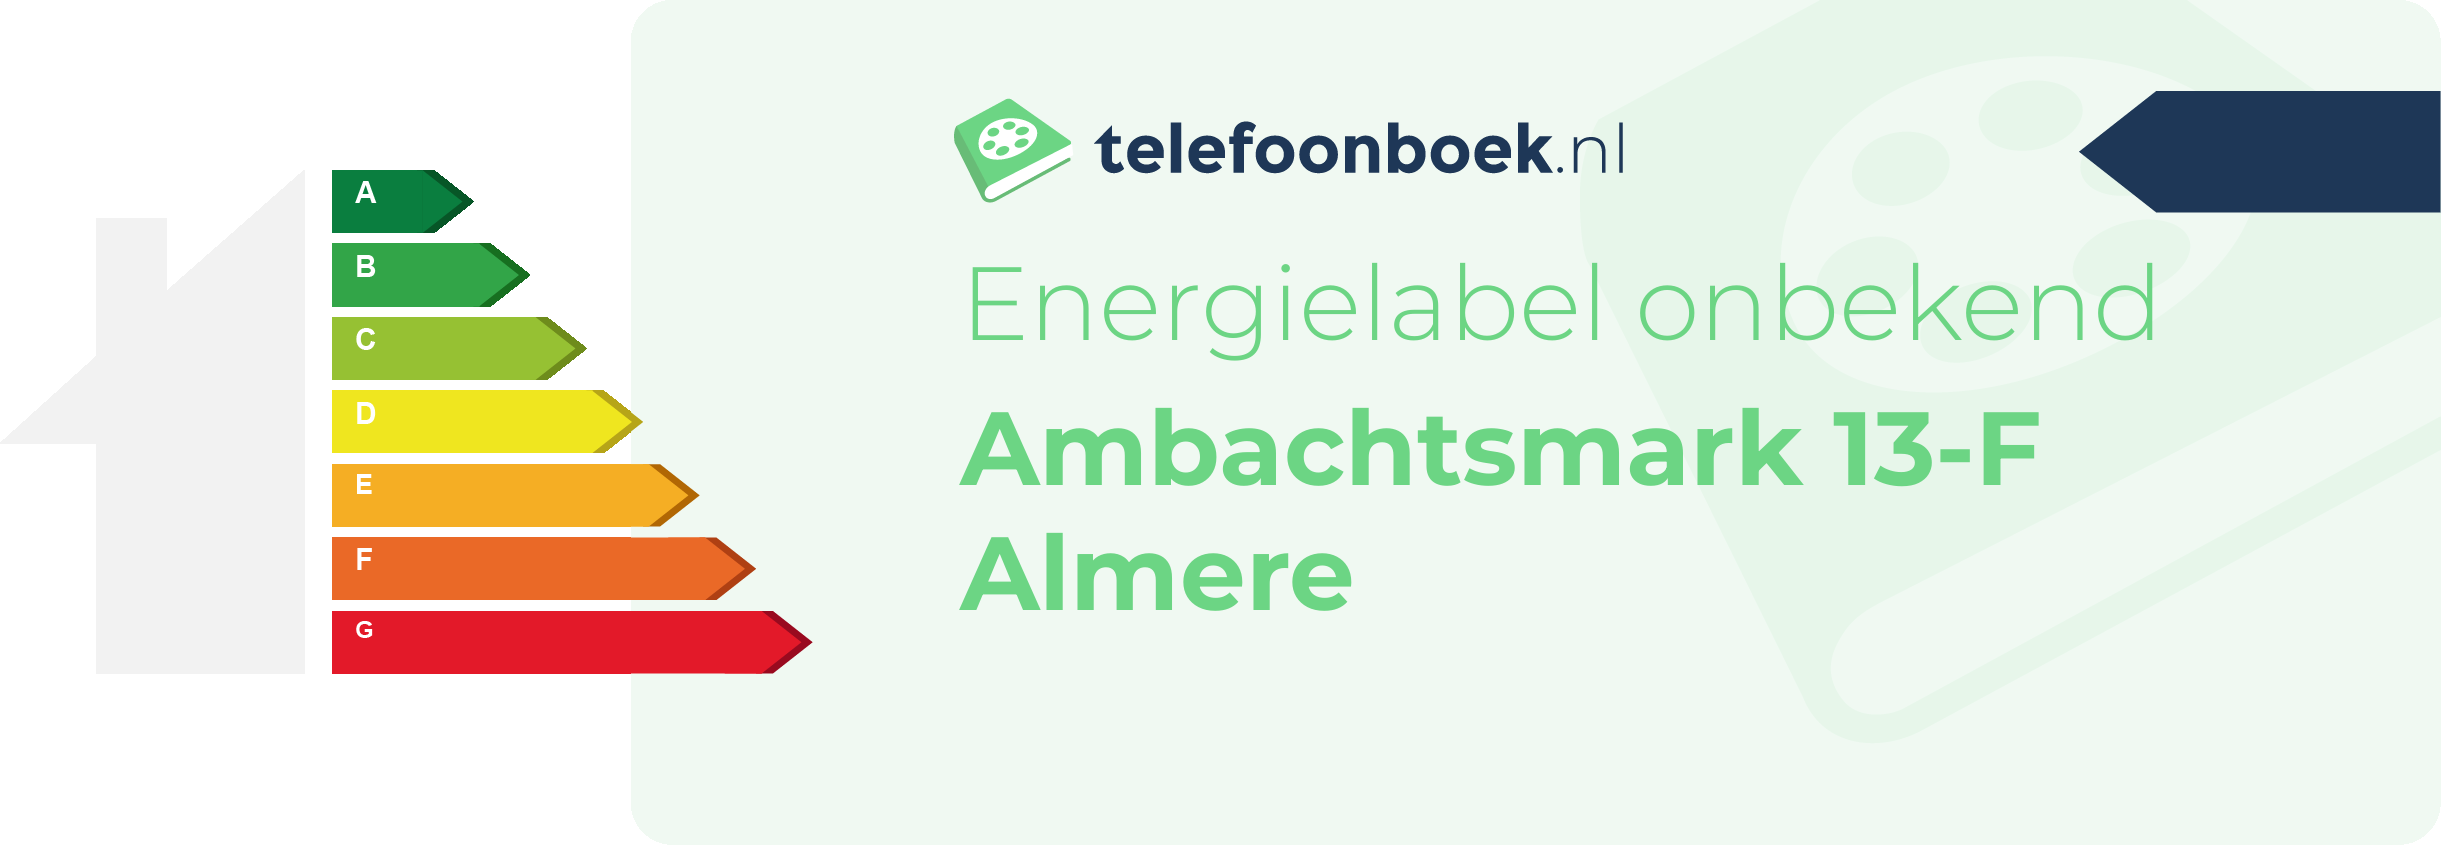 Energielabel Ambachtsmark 13-F Almere